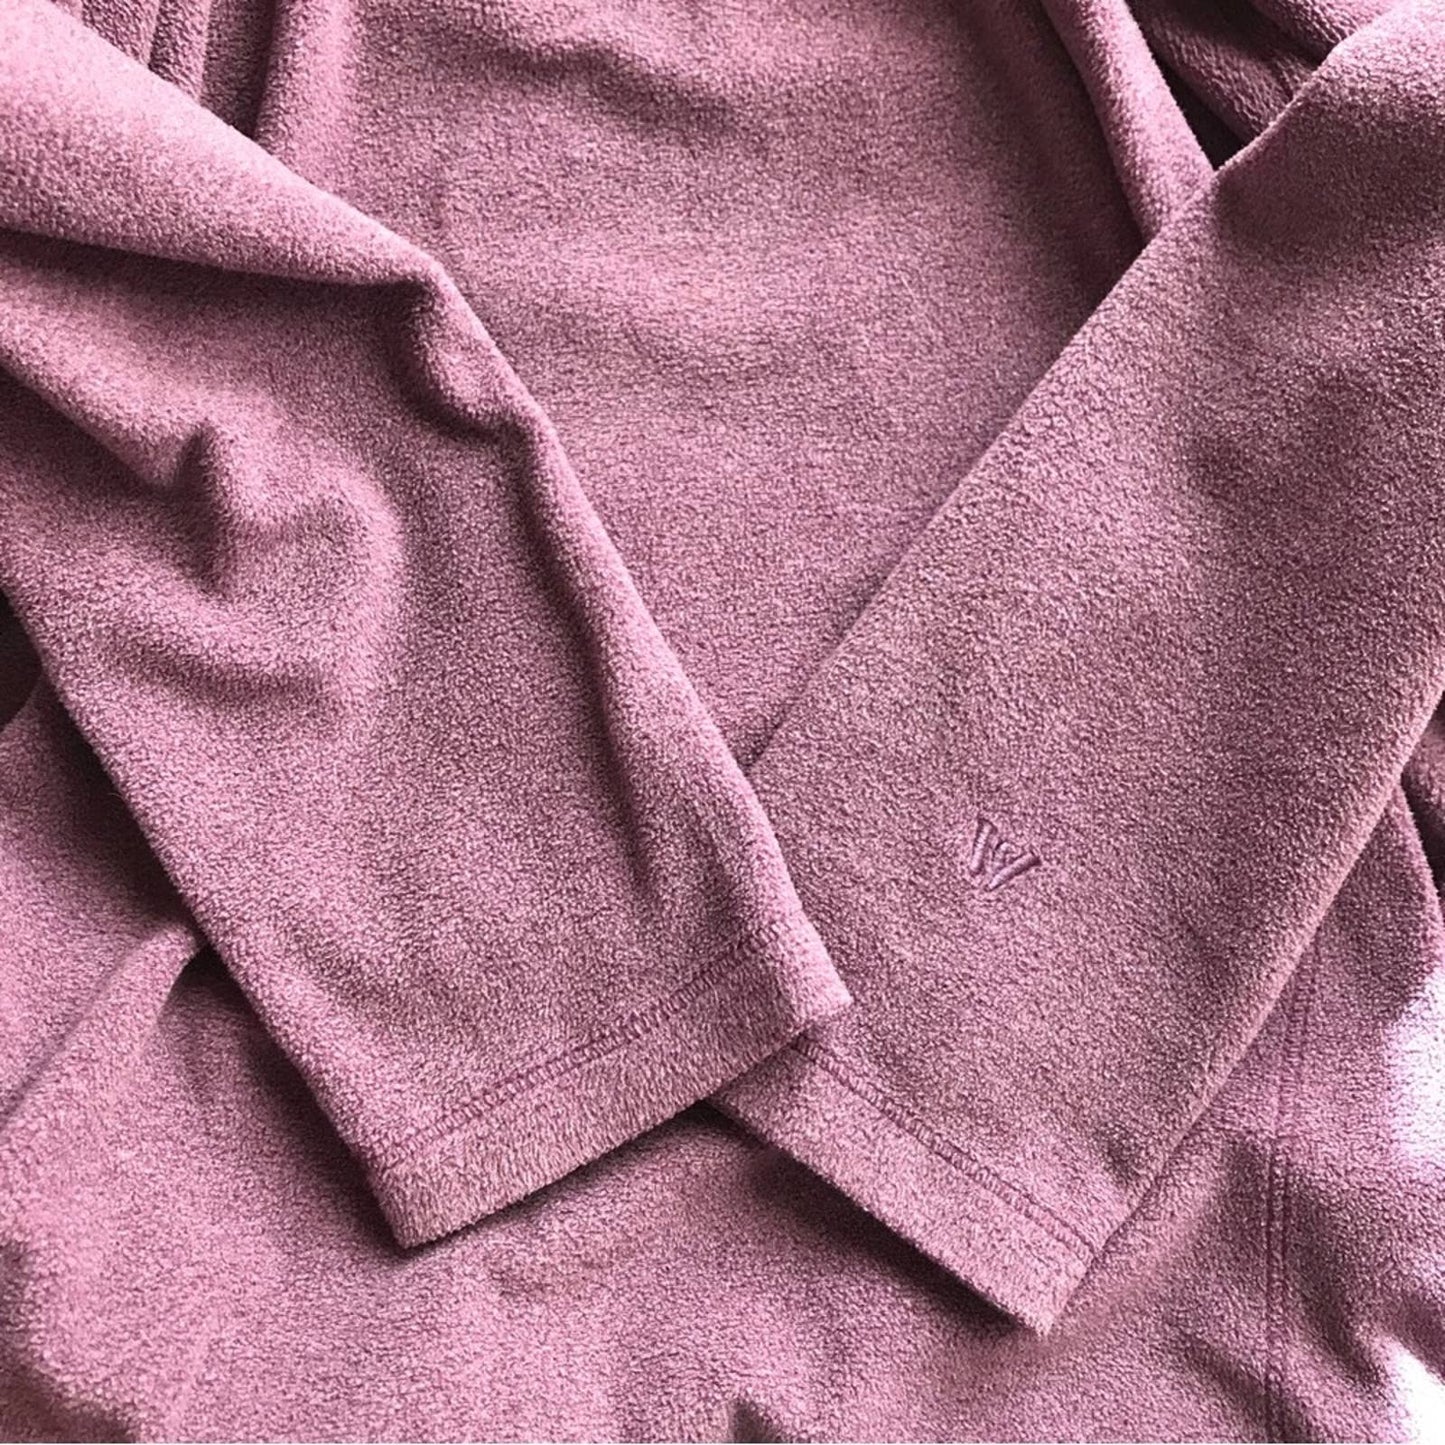 White Sierra Fleece Pullover 1/2 Zip Cozy Purple Soft Jacket Outdoor Layer Size M